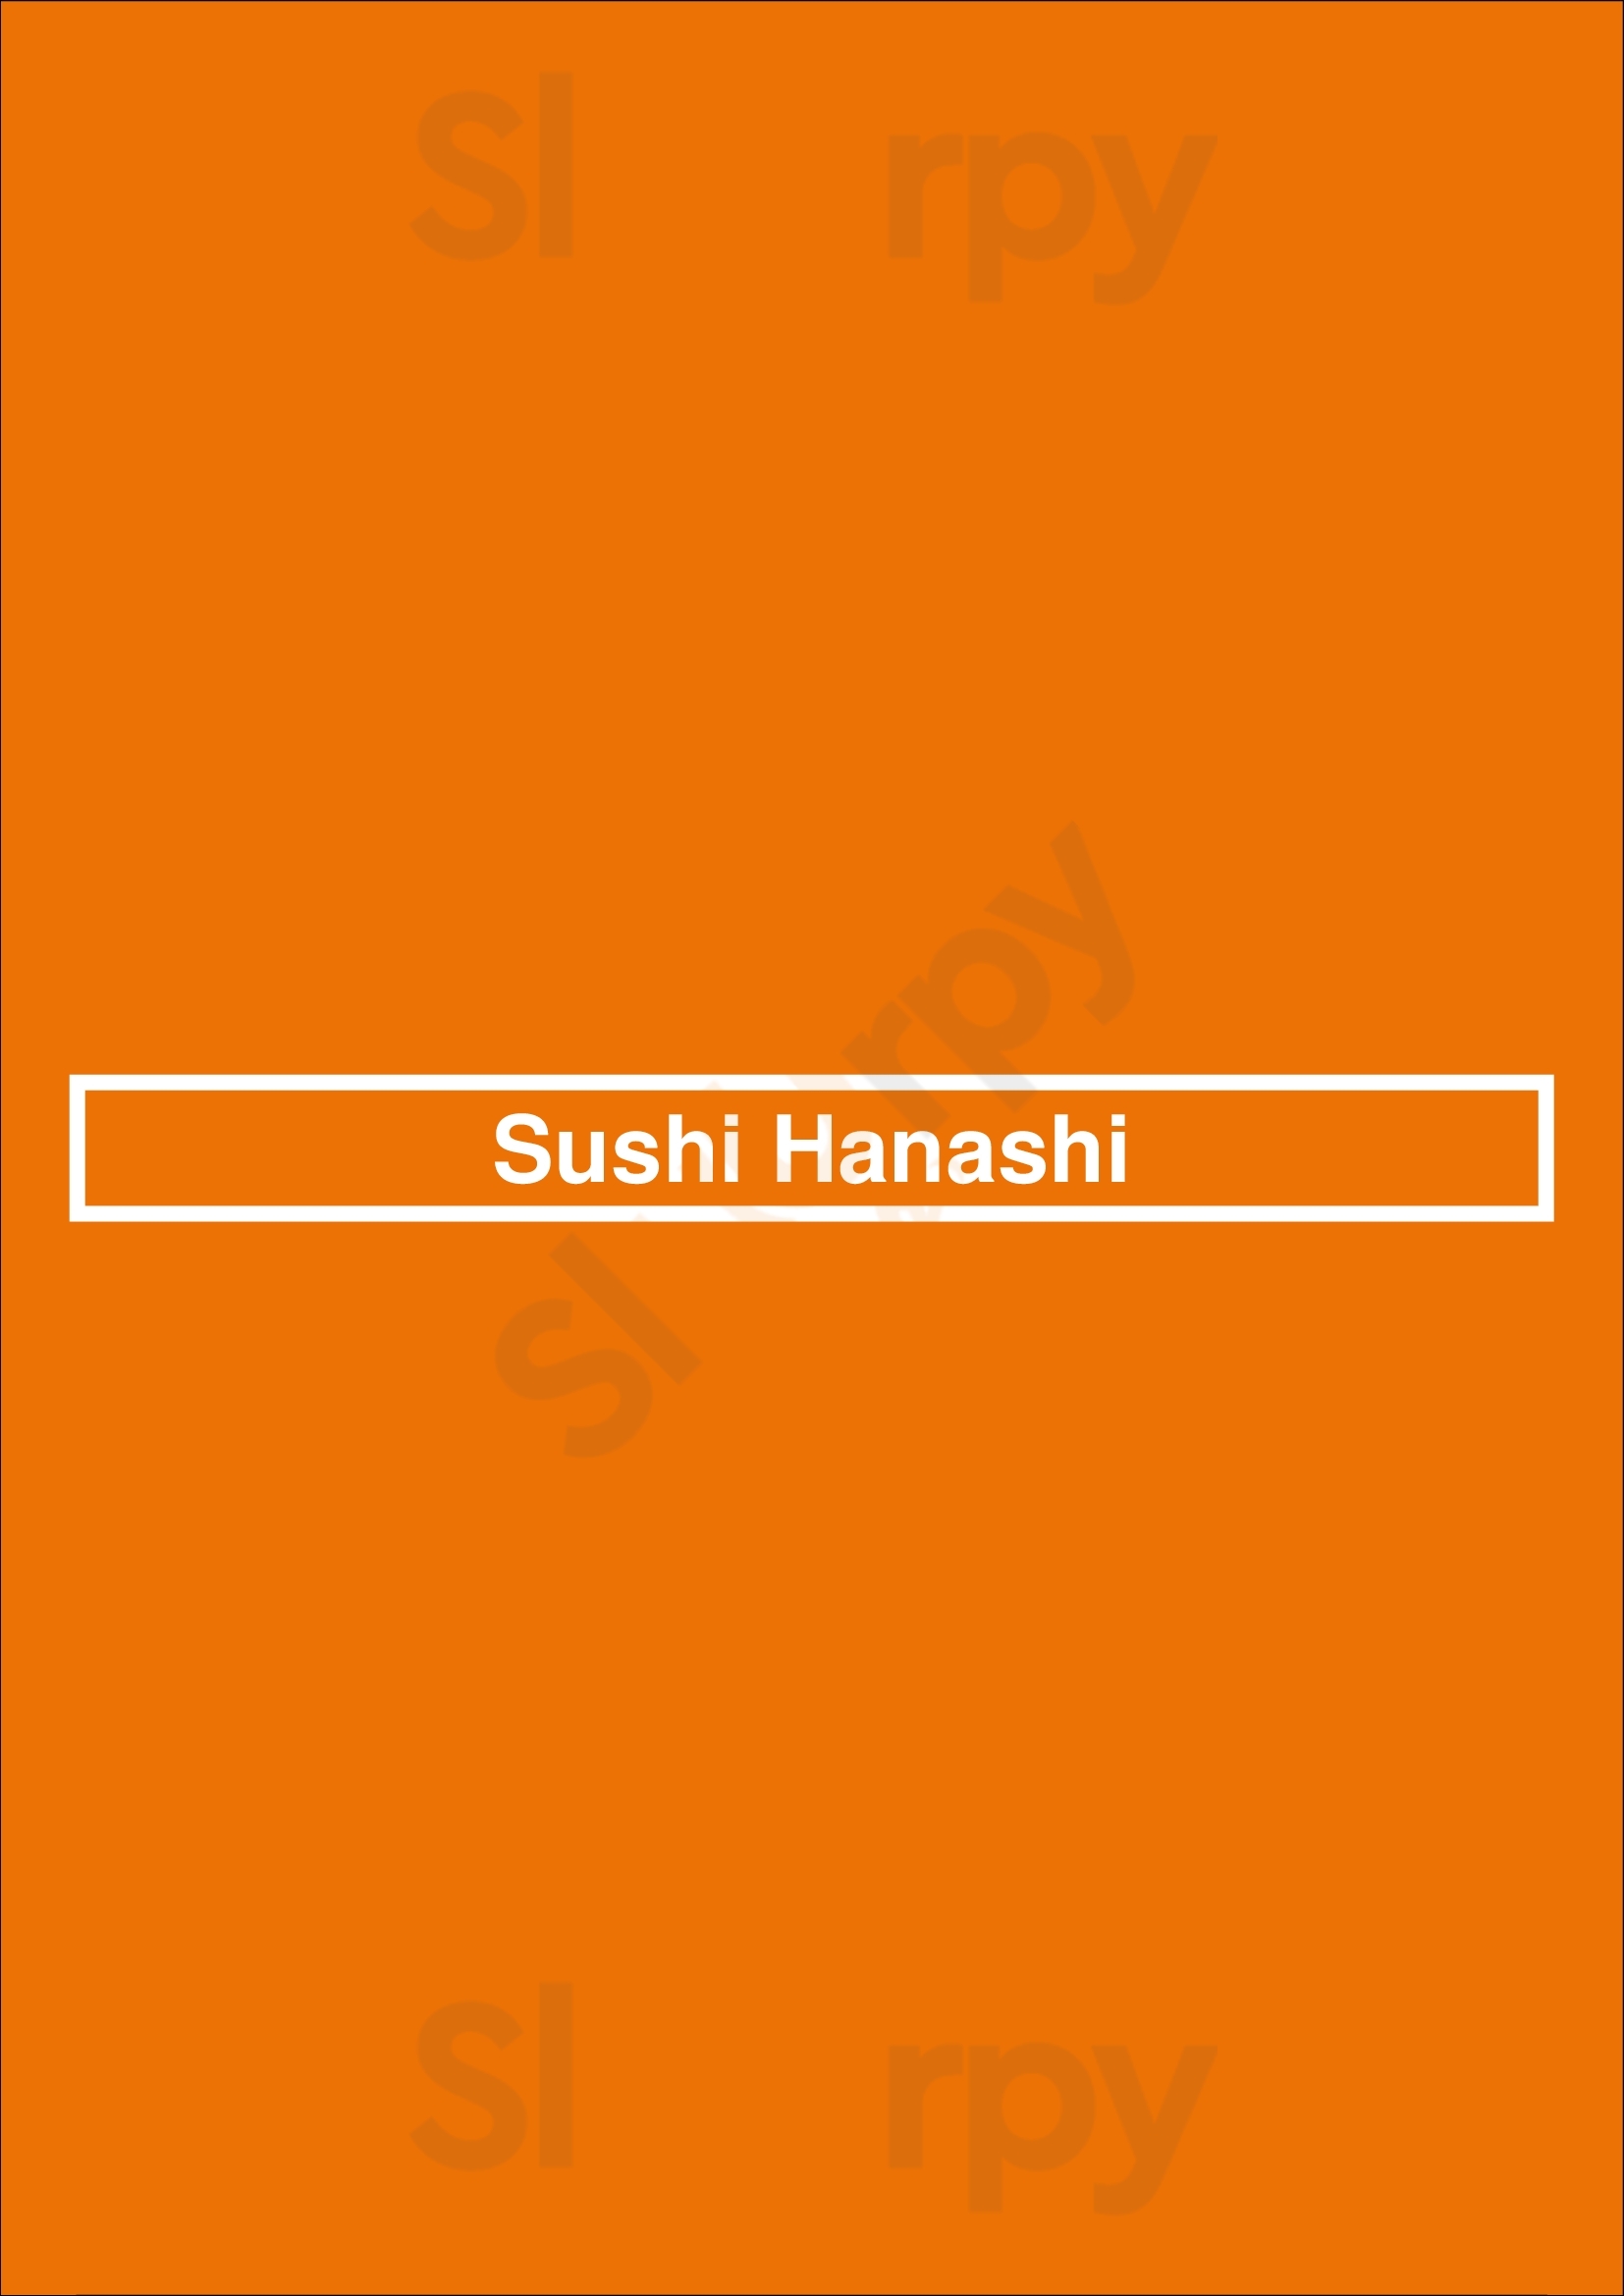 Sushi Hanashi Santa Monica Menu - 1